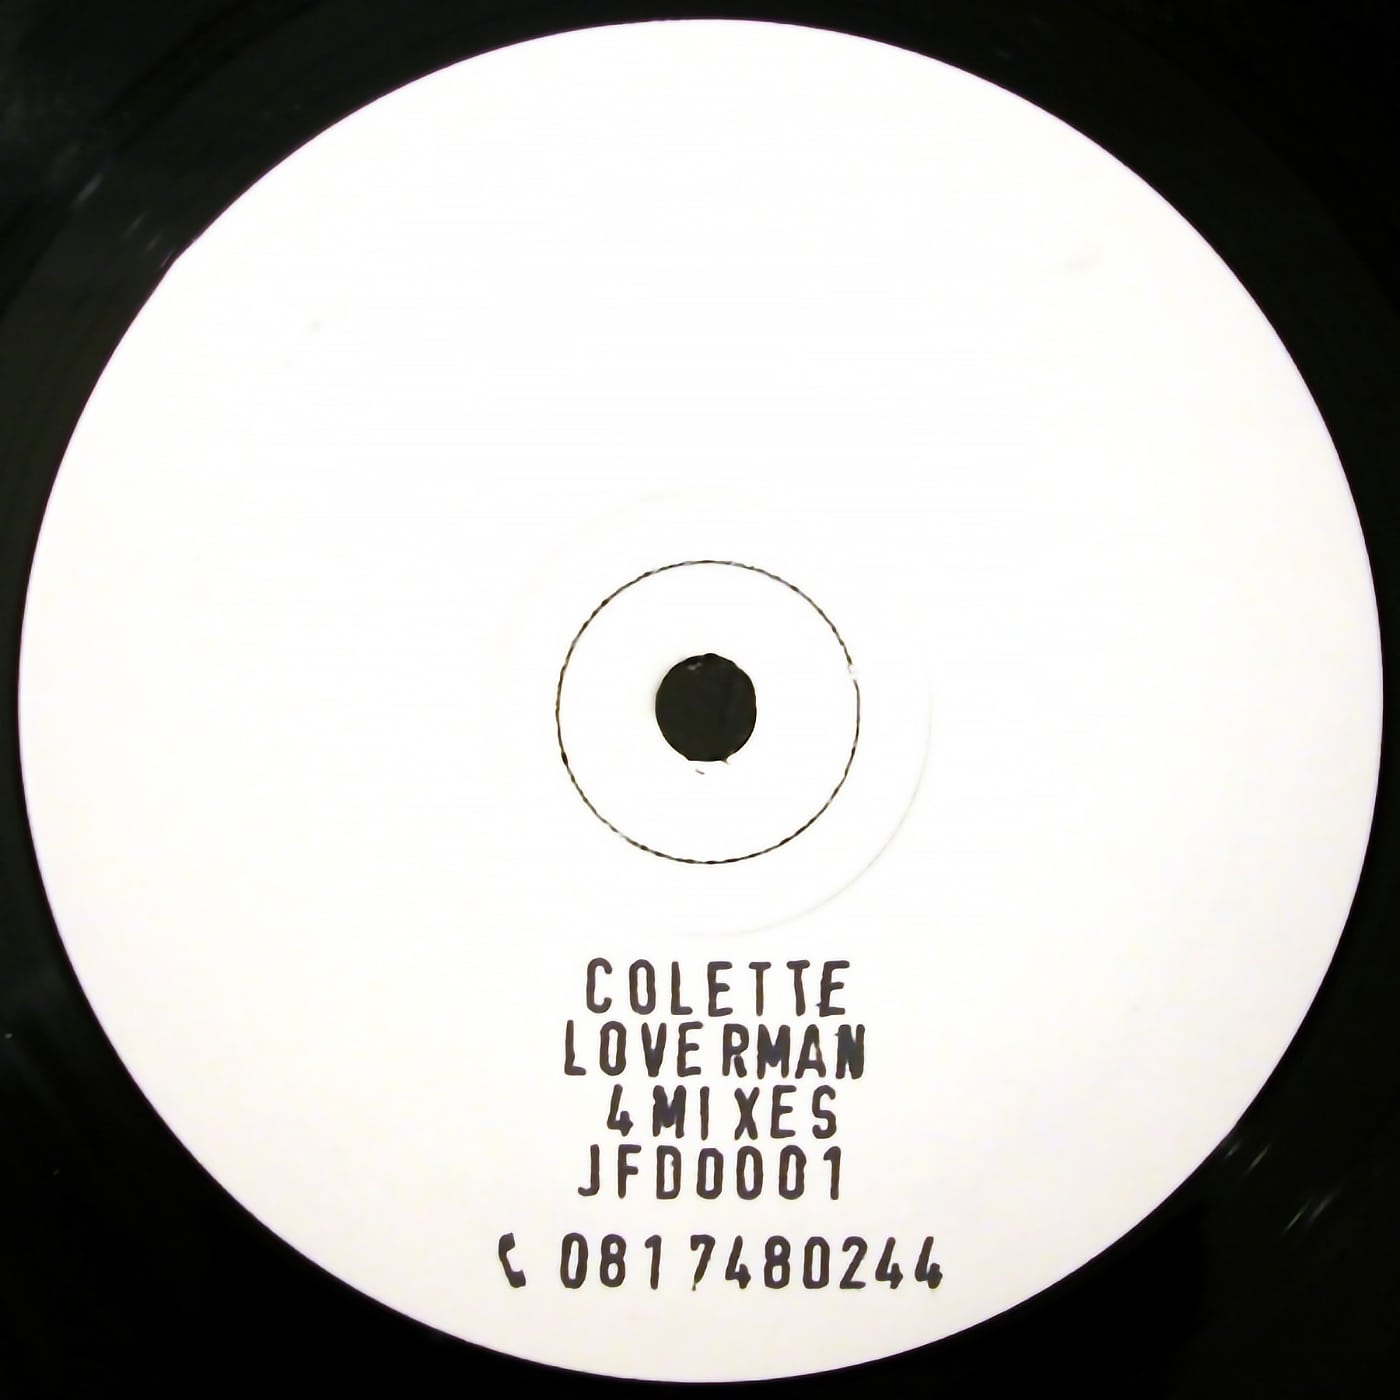 Download Colette - Loverman on Electrobuzz